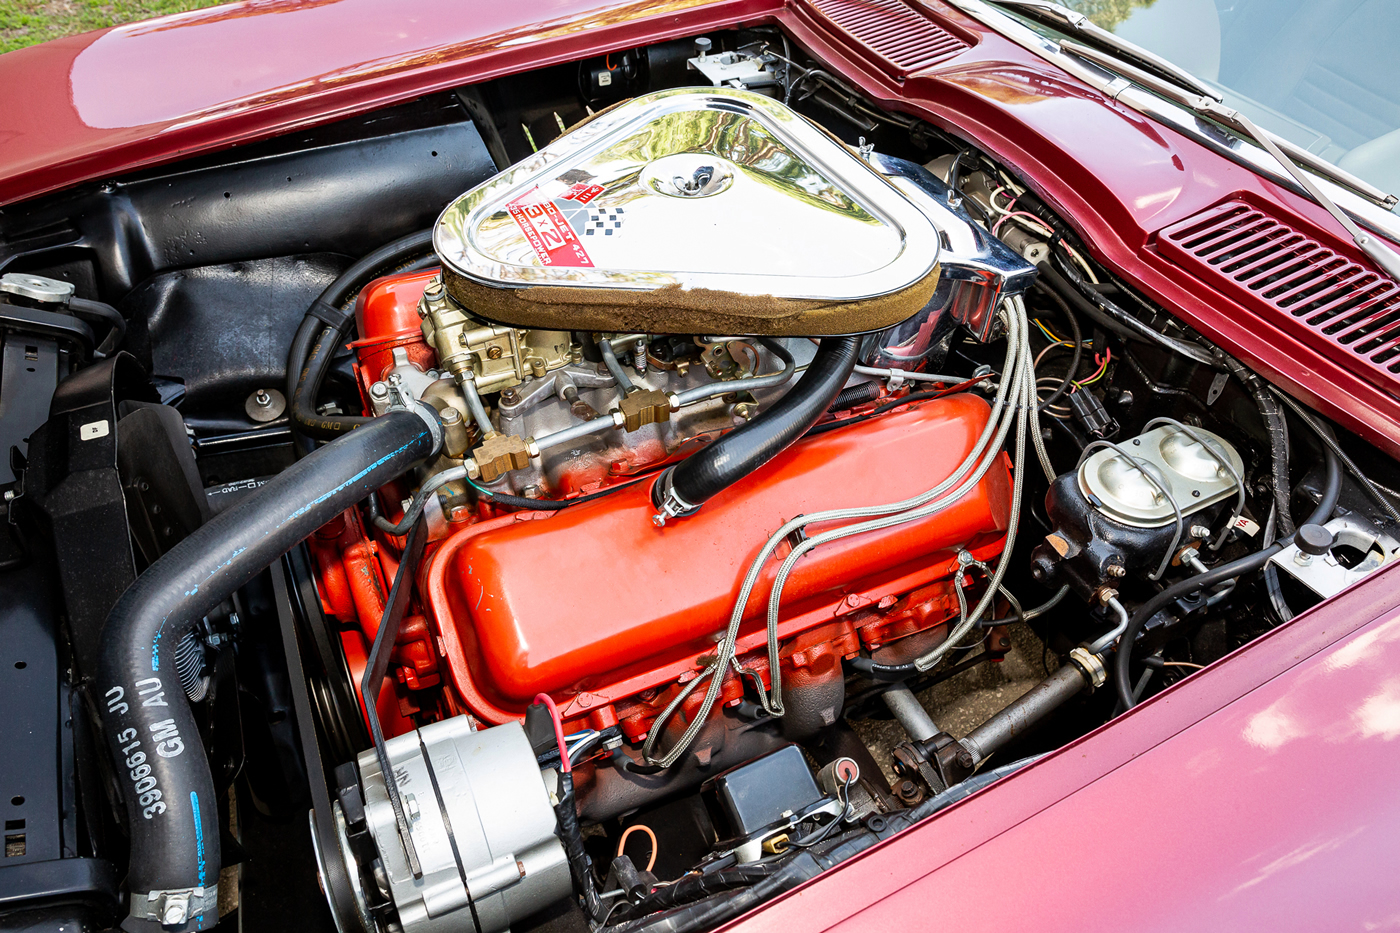 1967 Corvette Coupe L71 427/435 4-Speed in Marlboro Maroon